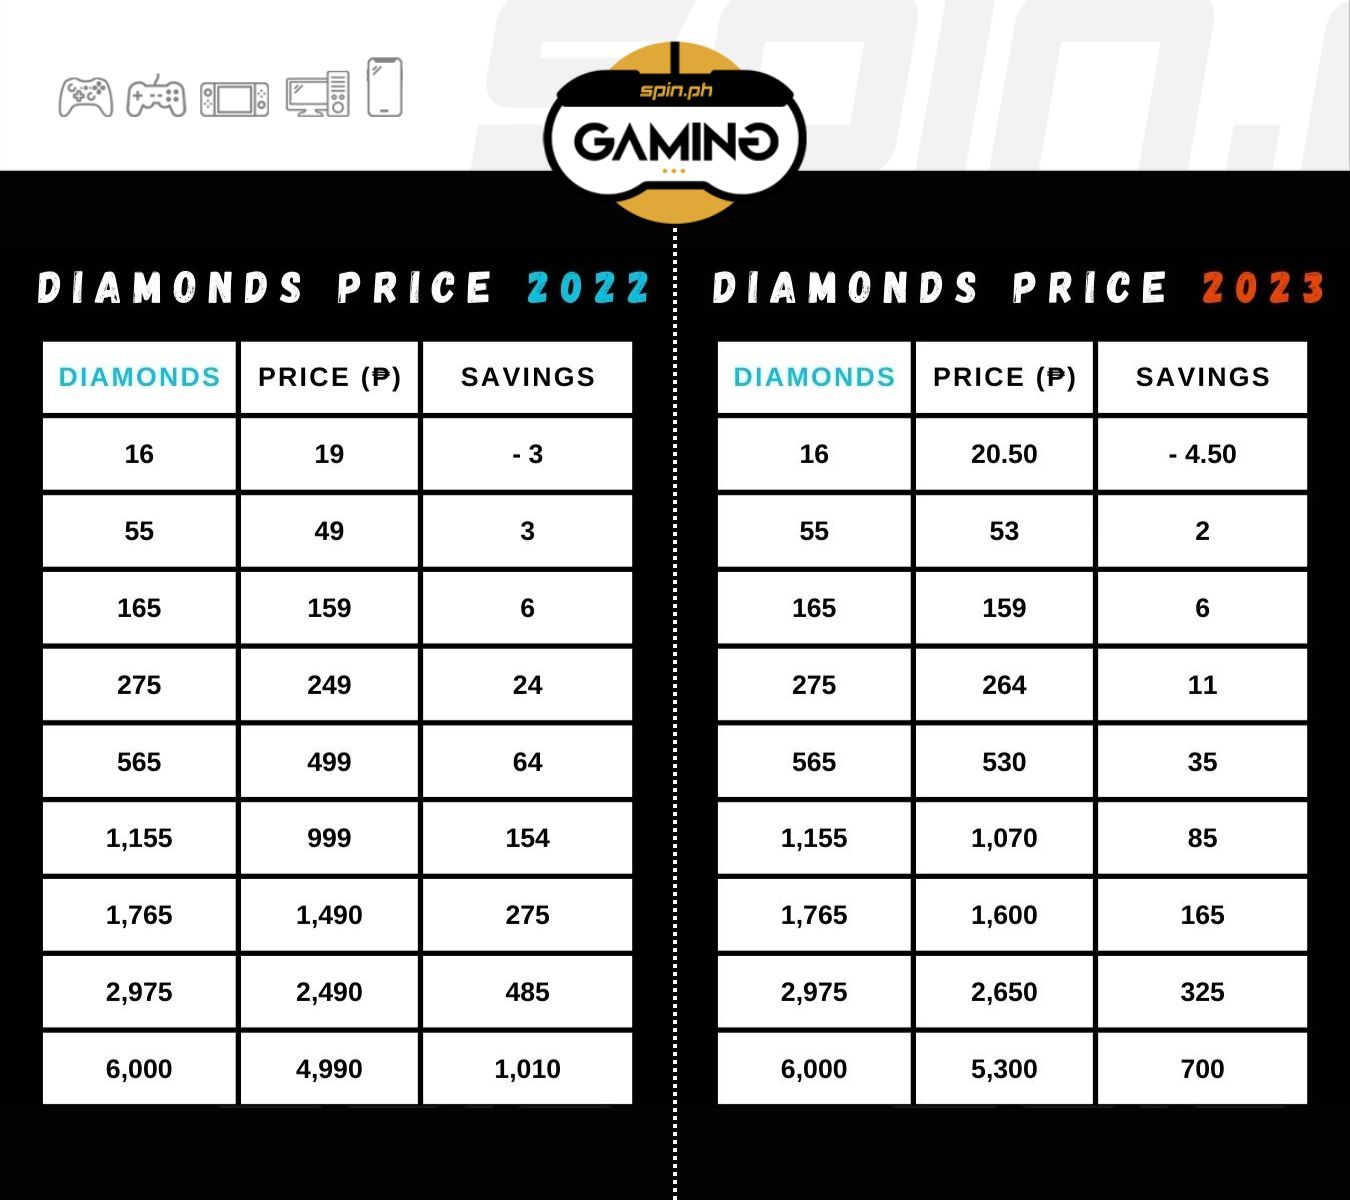 Mobile Legends diamonds price